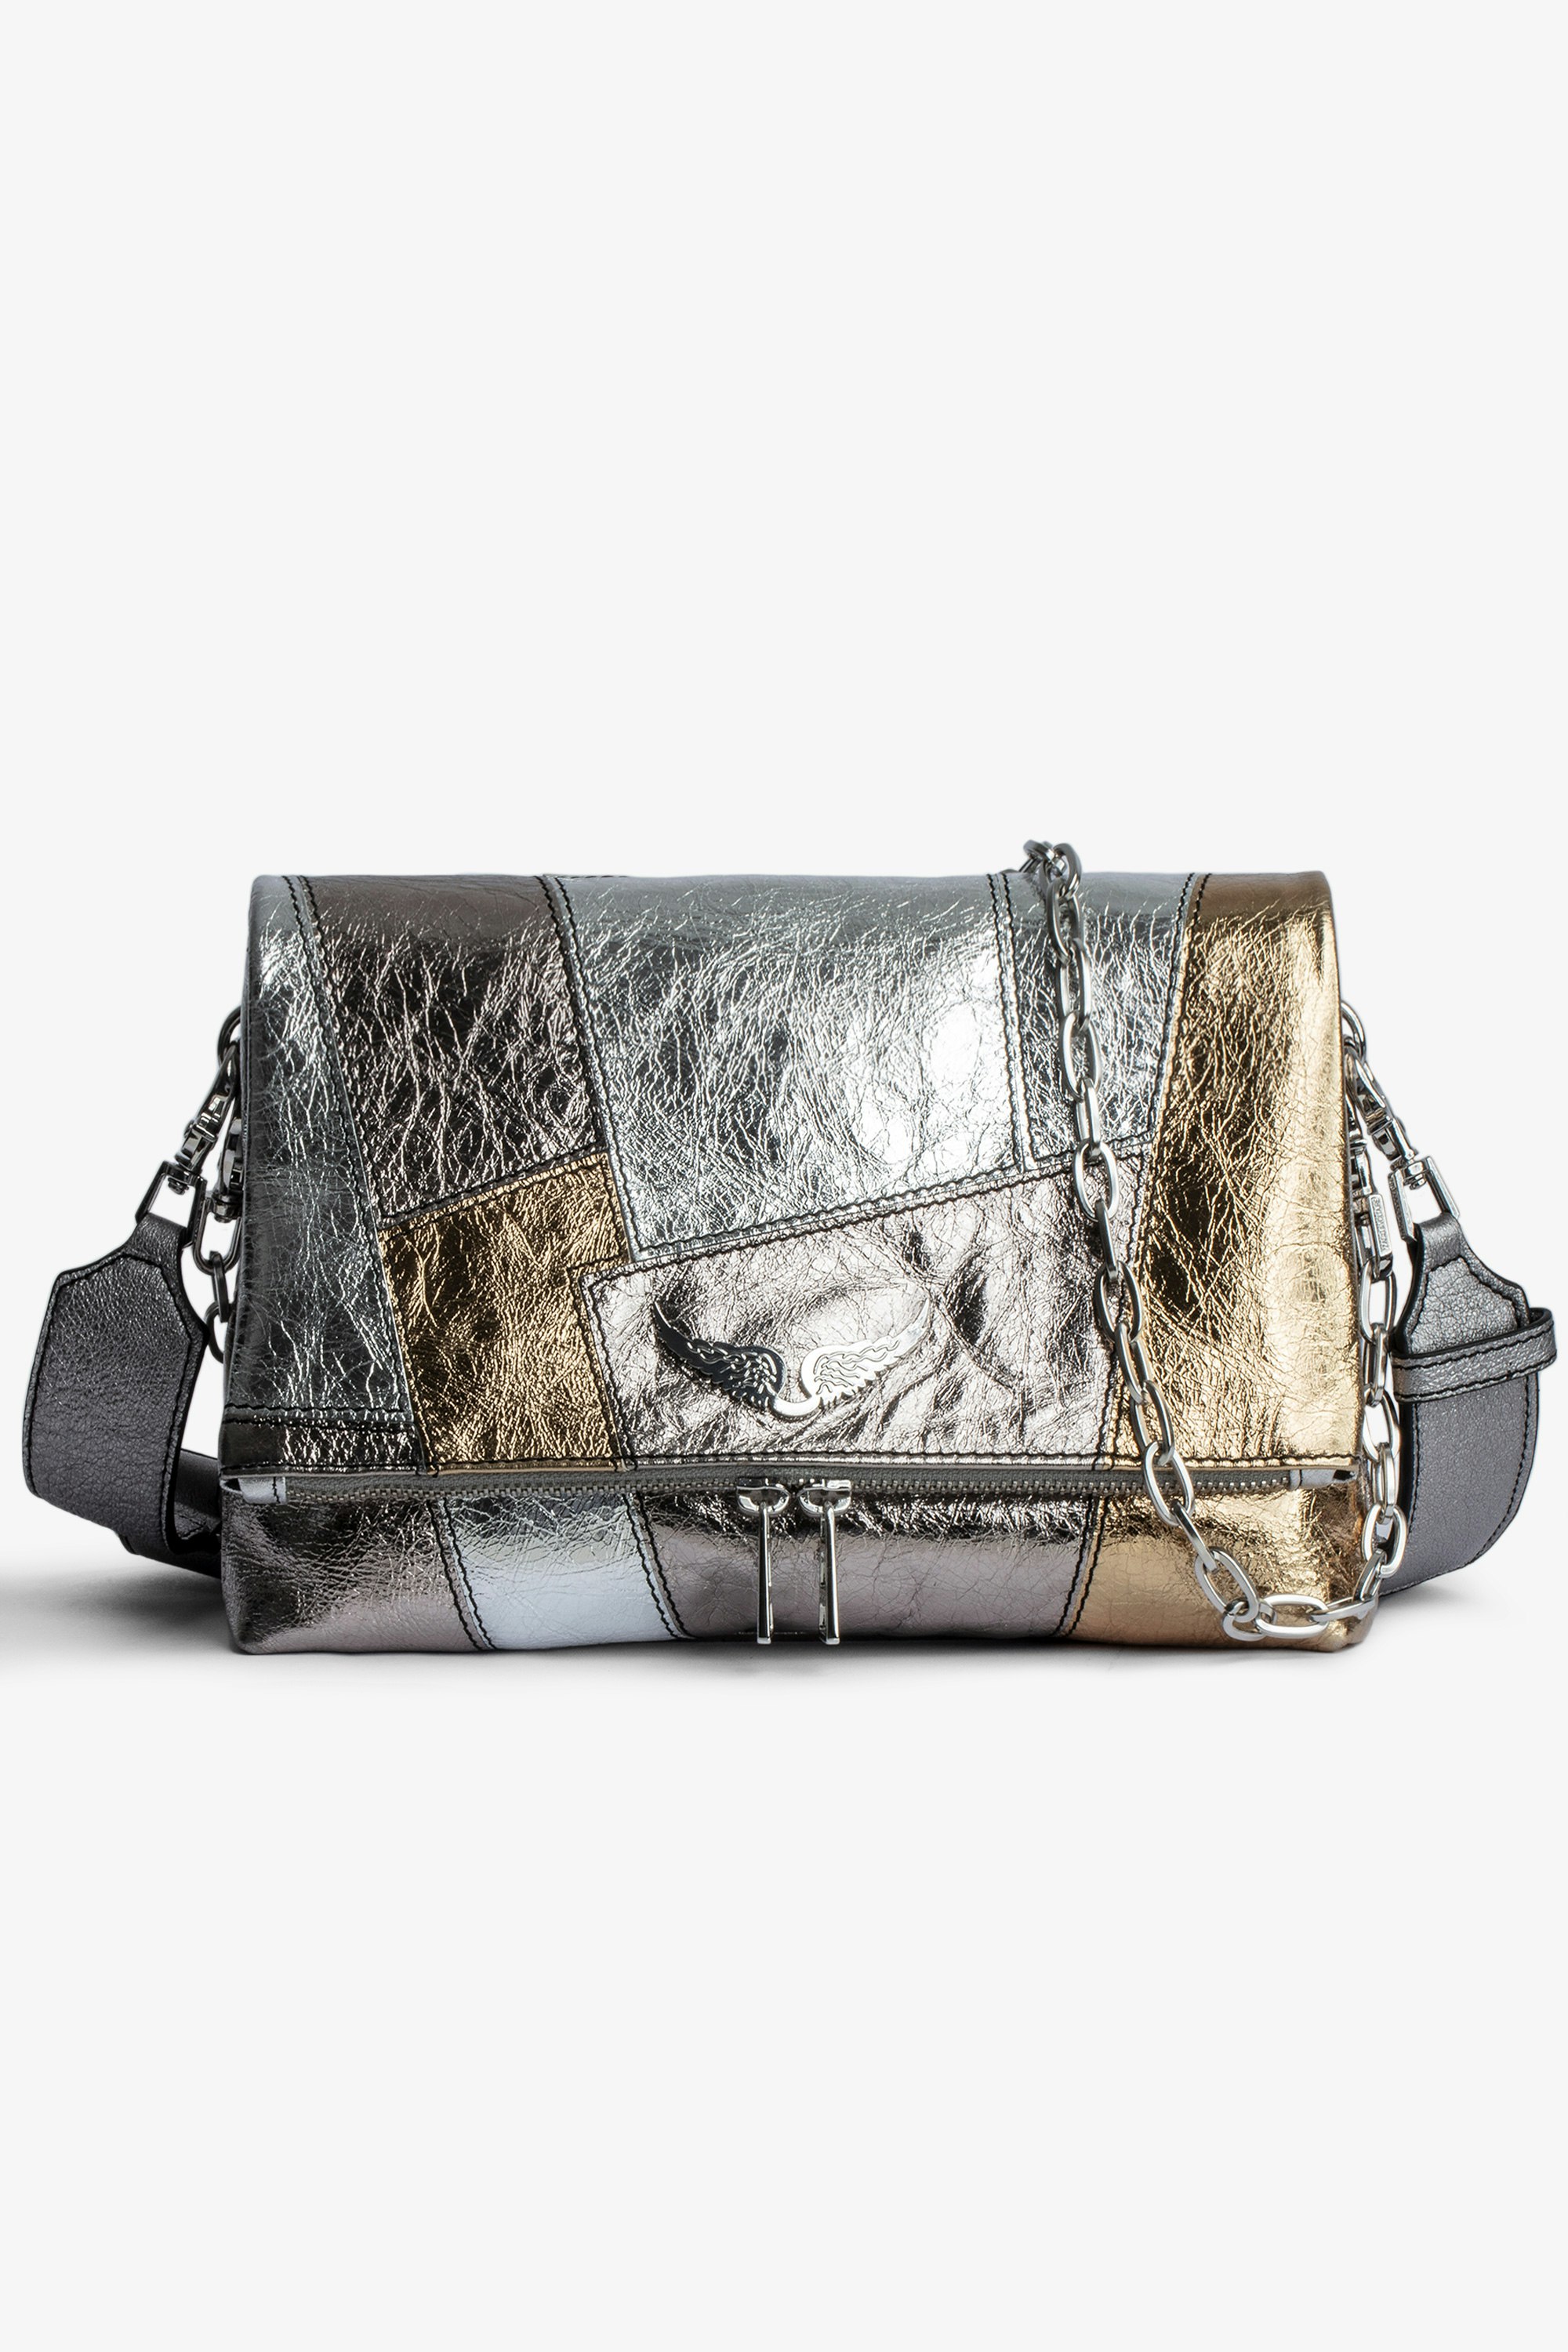 Rocky Vintage Metal Patchwork バッグ Women’s shoulder bag in vintage-effect silver and gold metallic leather patchwork 